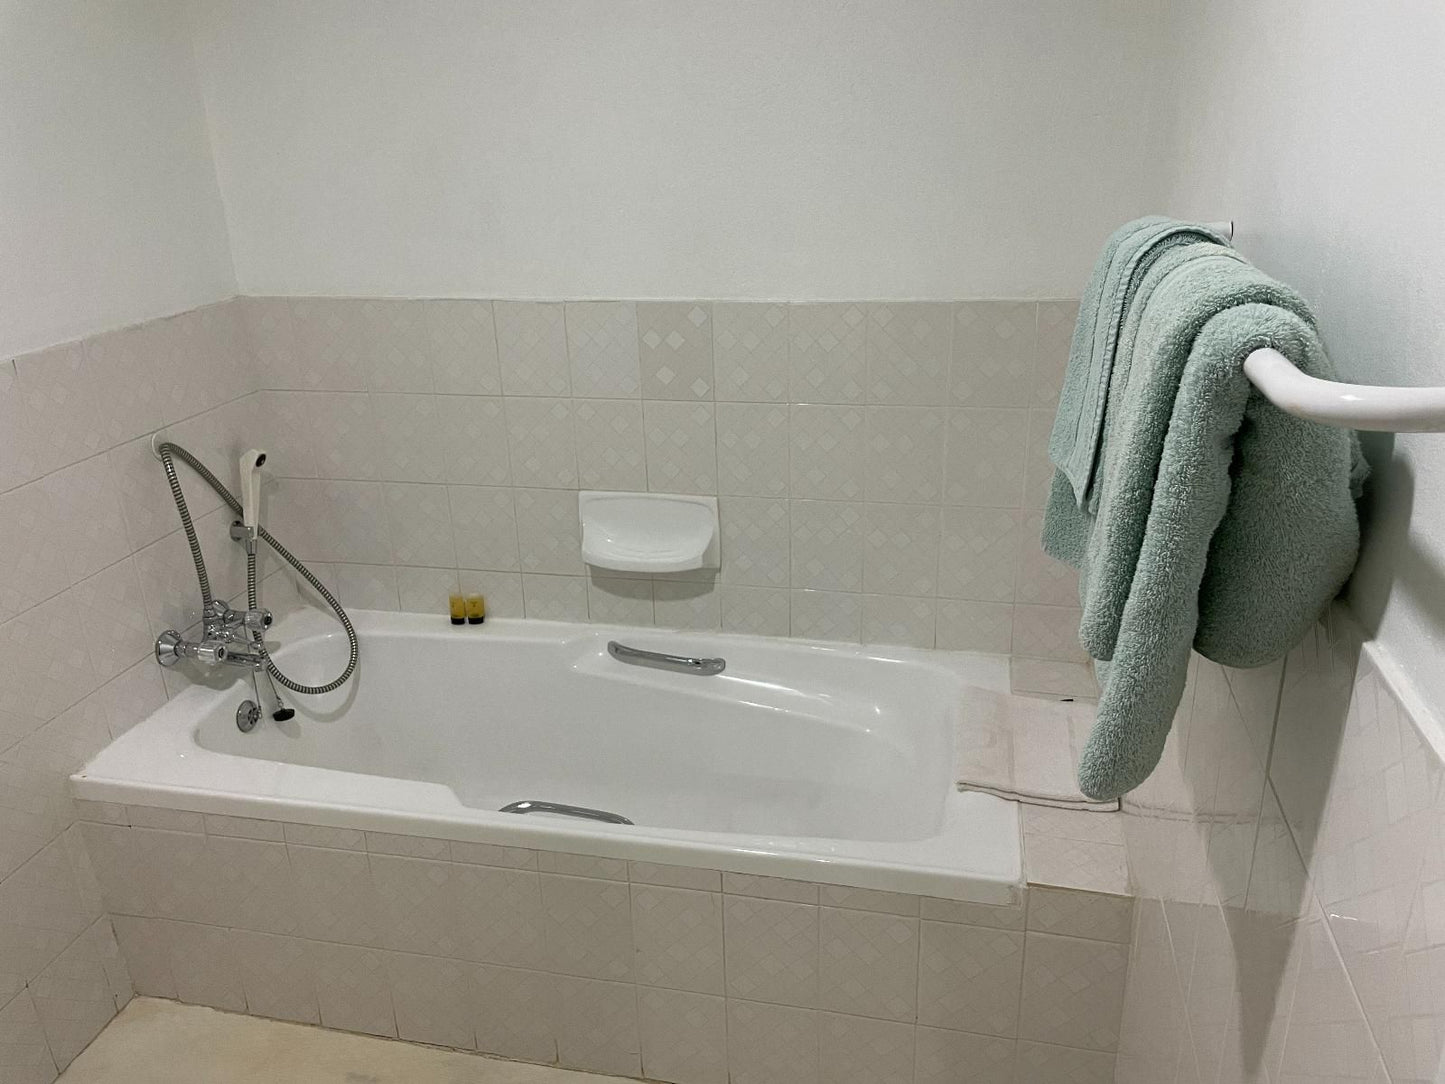 Samoa Hotel Moorreesburg Western Cape South Africa Colorless, Bathroom